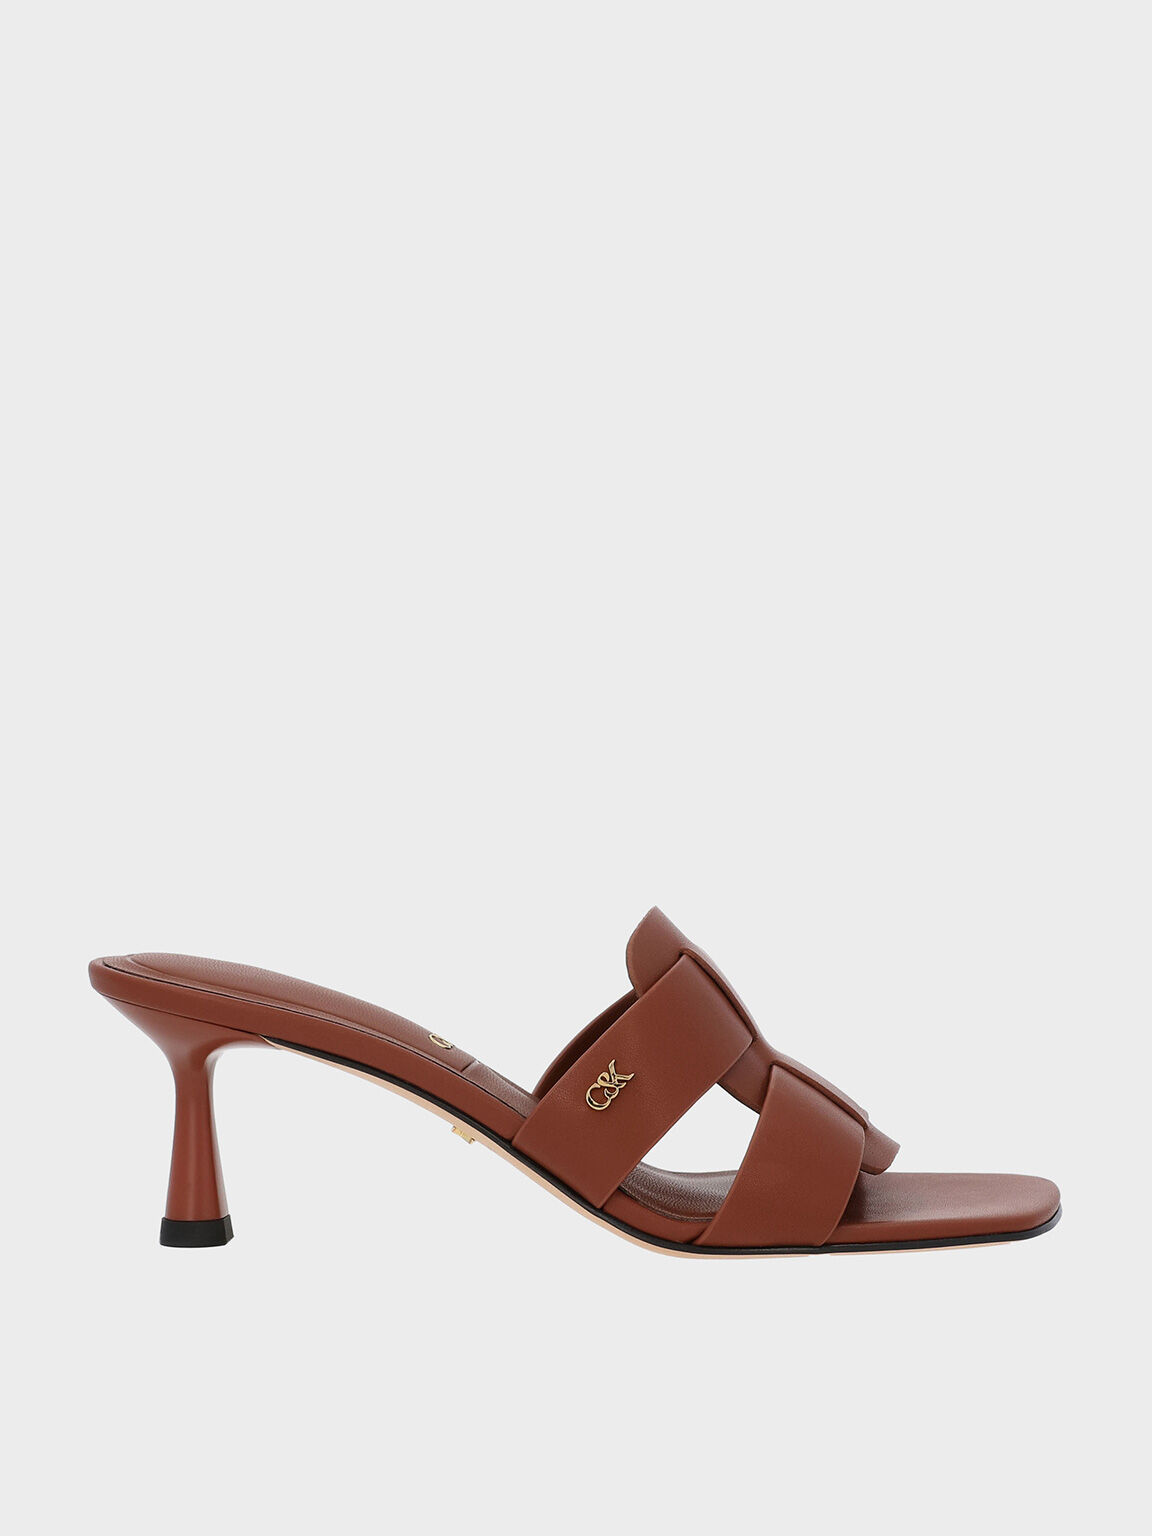 Sepatu Mules Spool Heel Interwoven Leather Trichelle, Dark Brown, hi-res